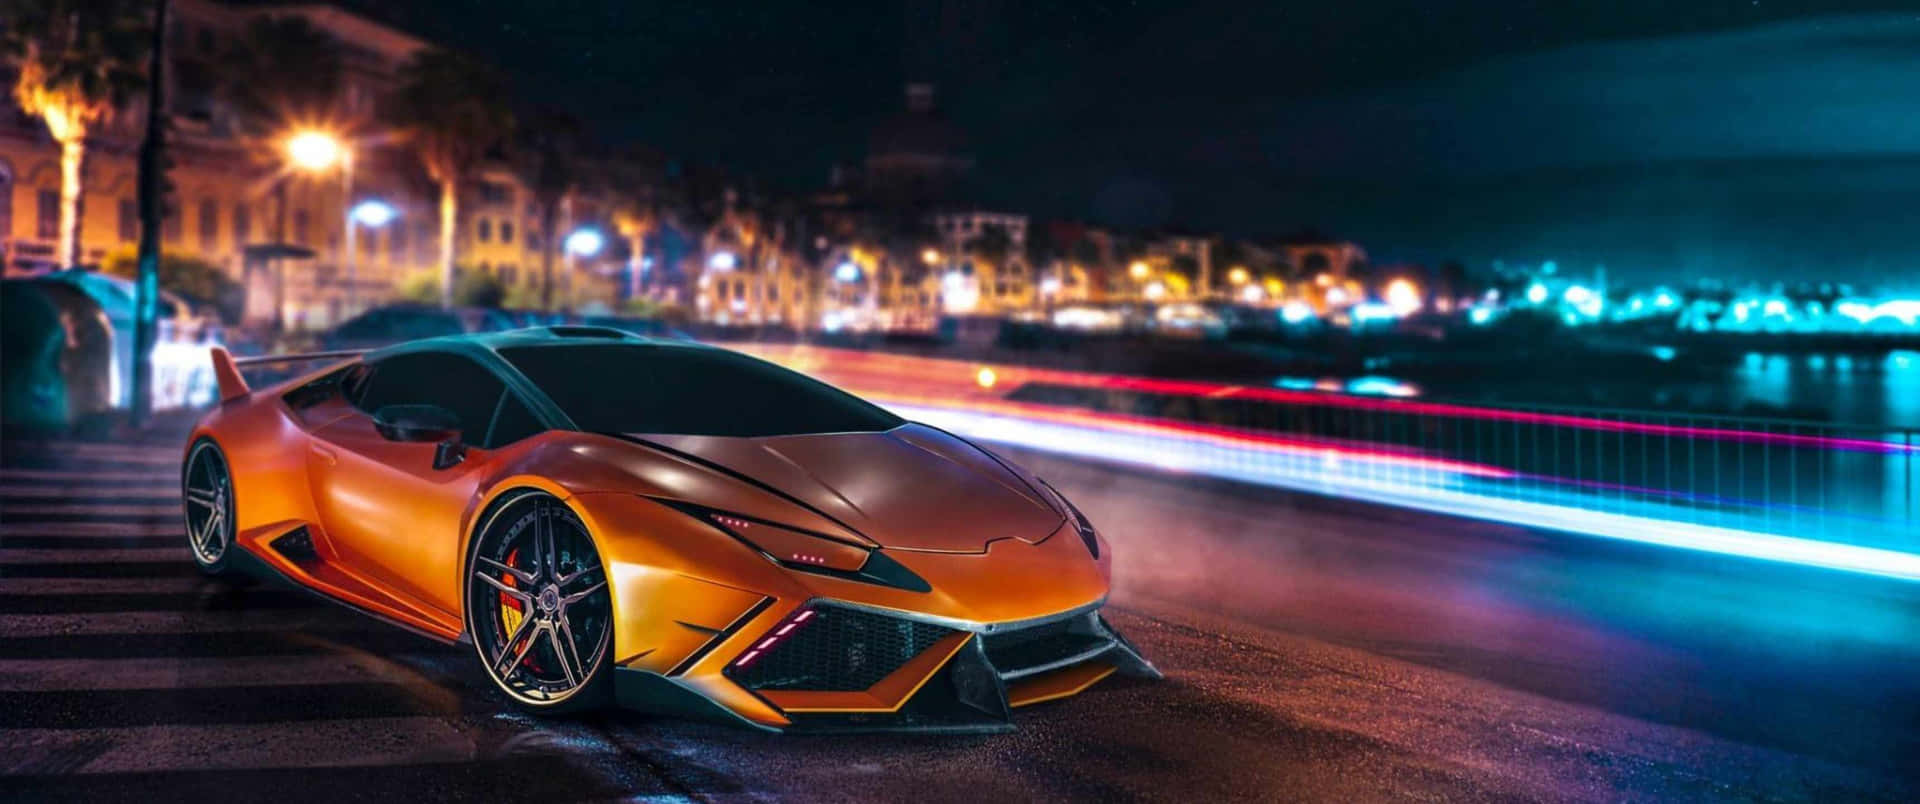 Feel the Power of a Lamborghini Supercar